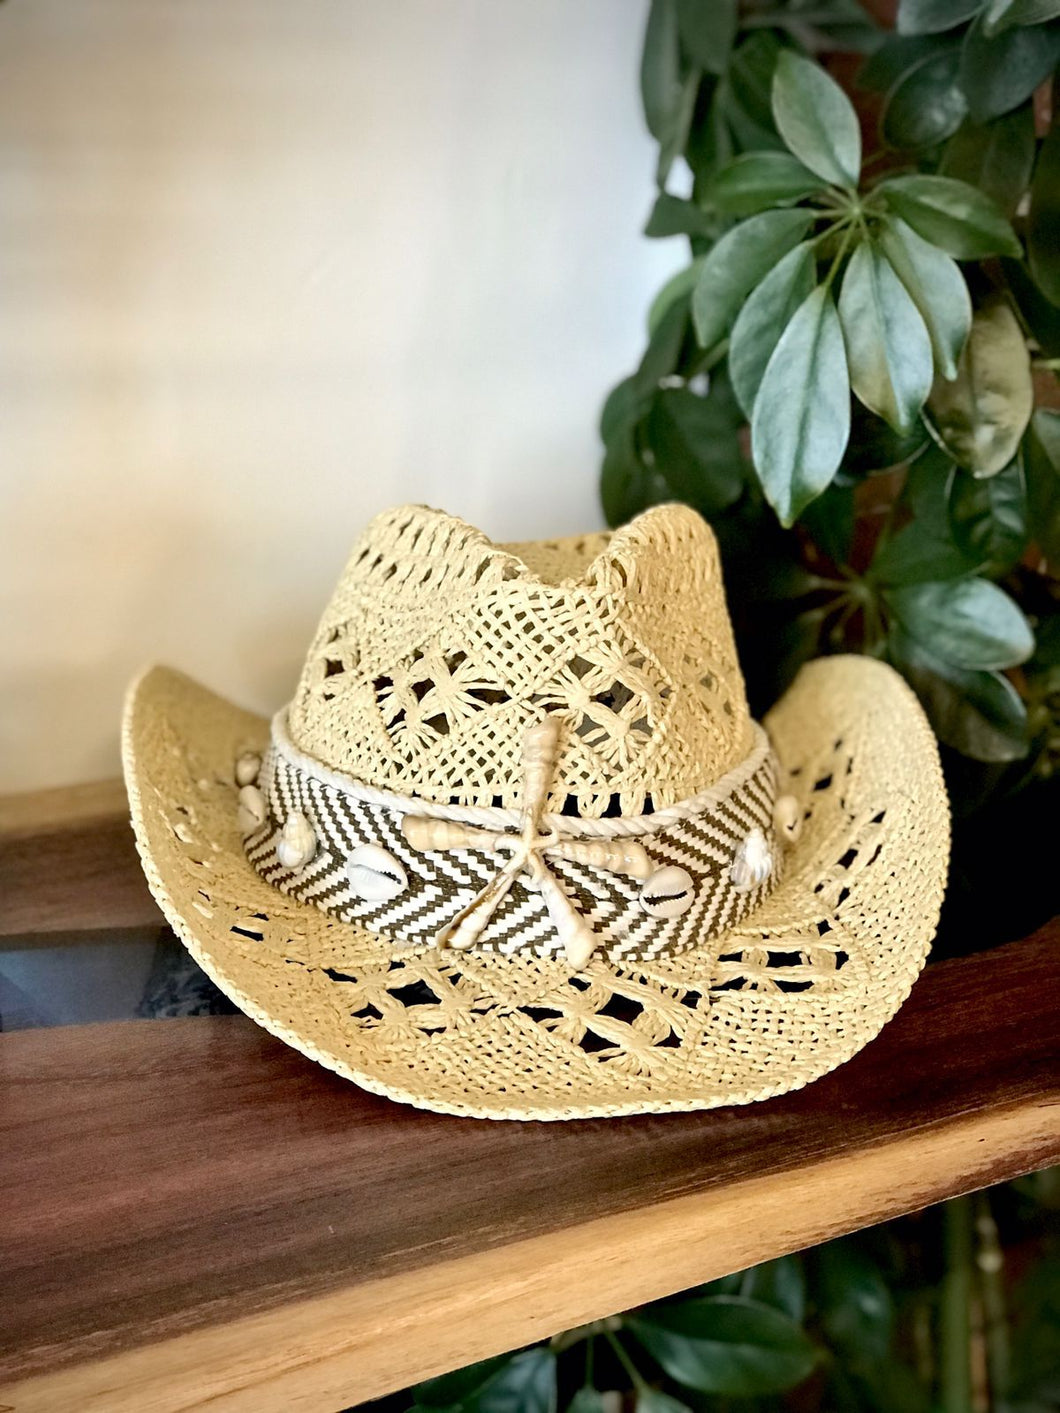 Cowboy hat with seashells